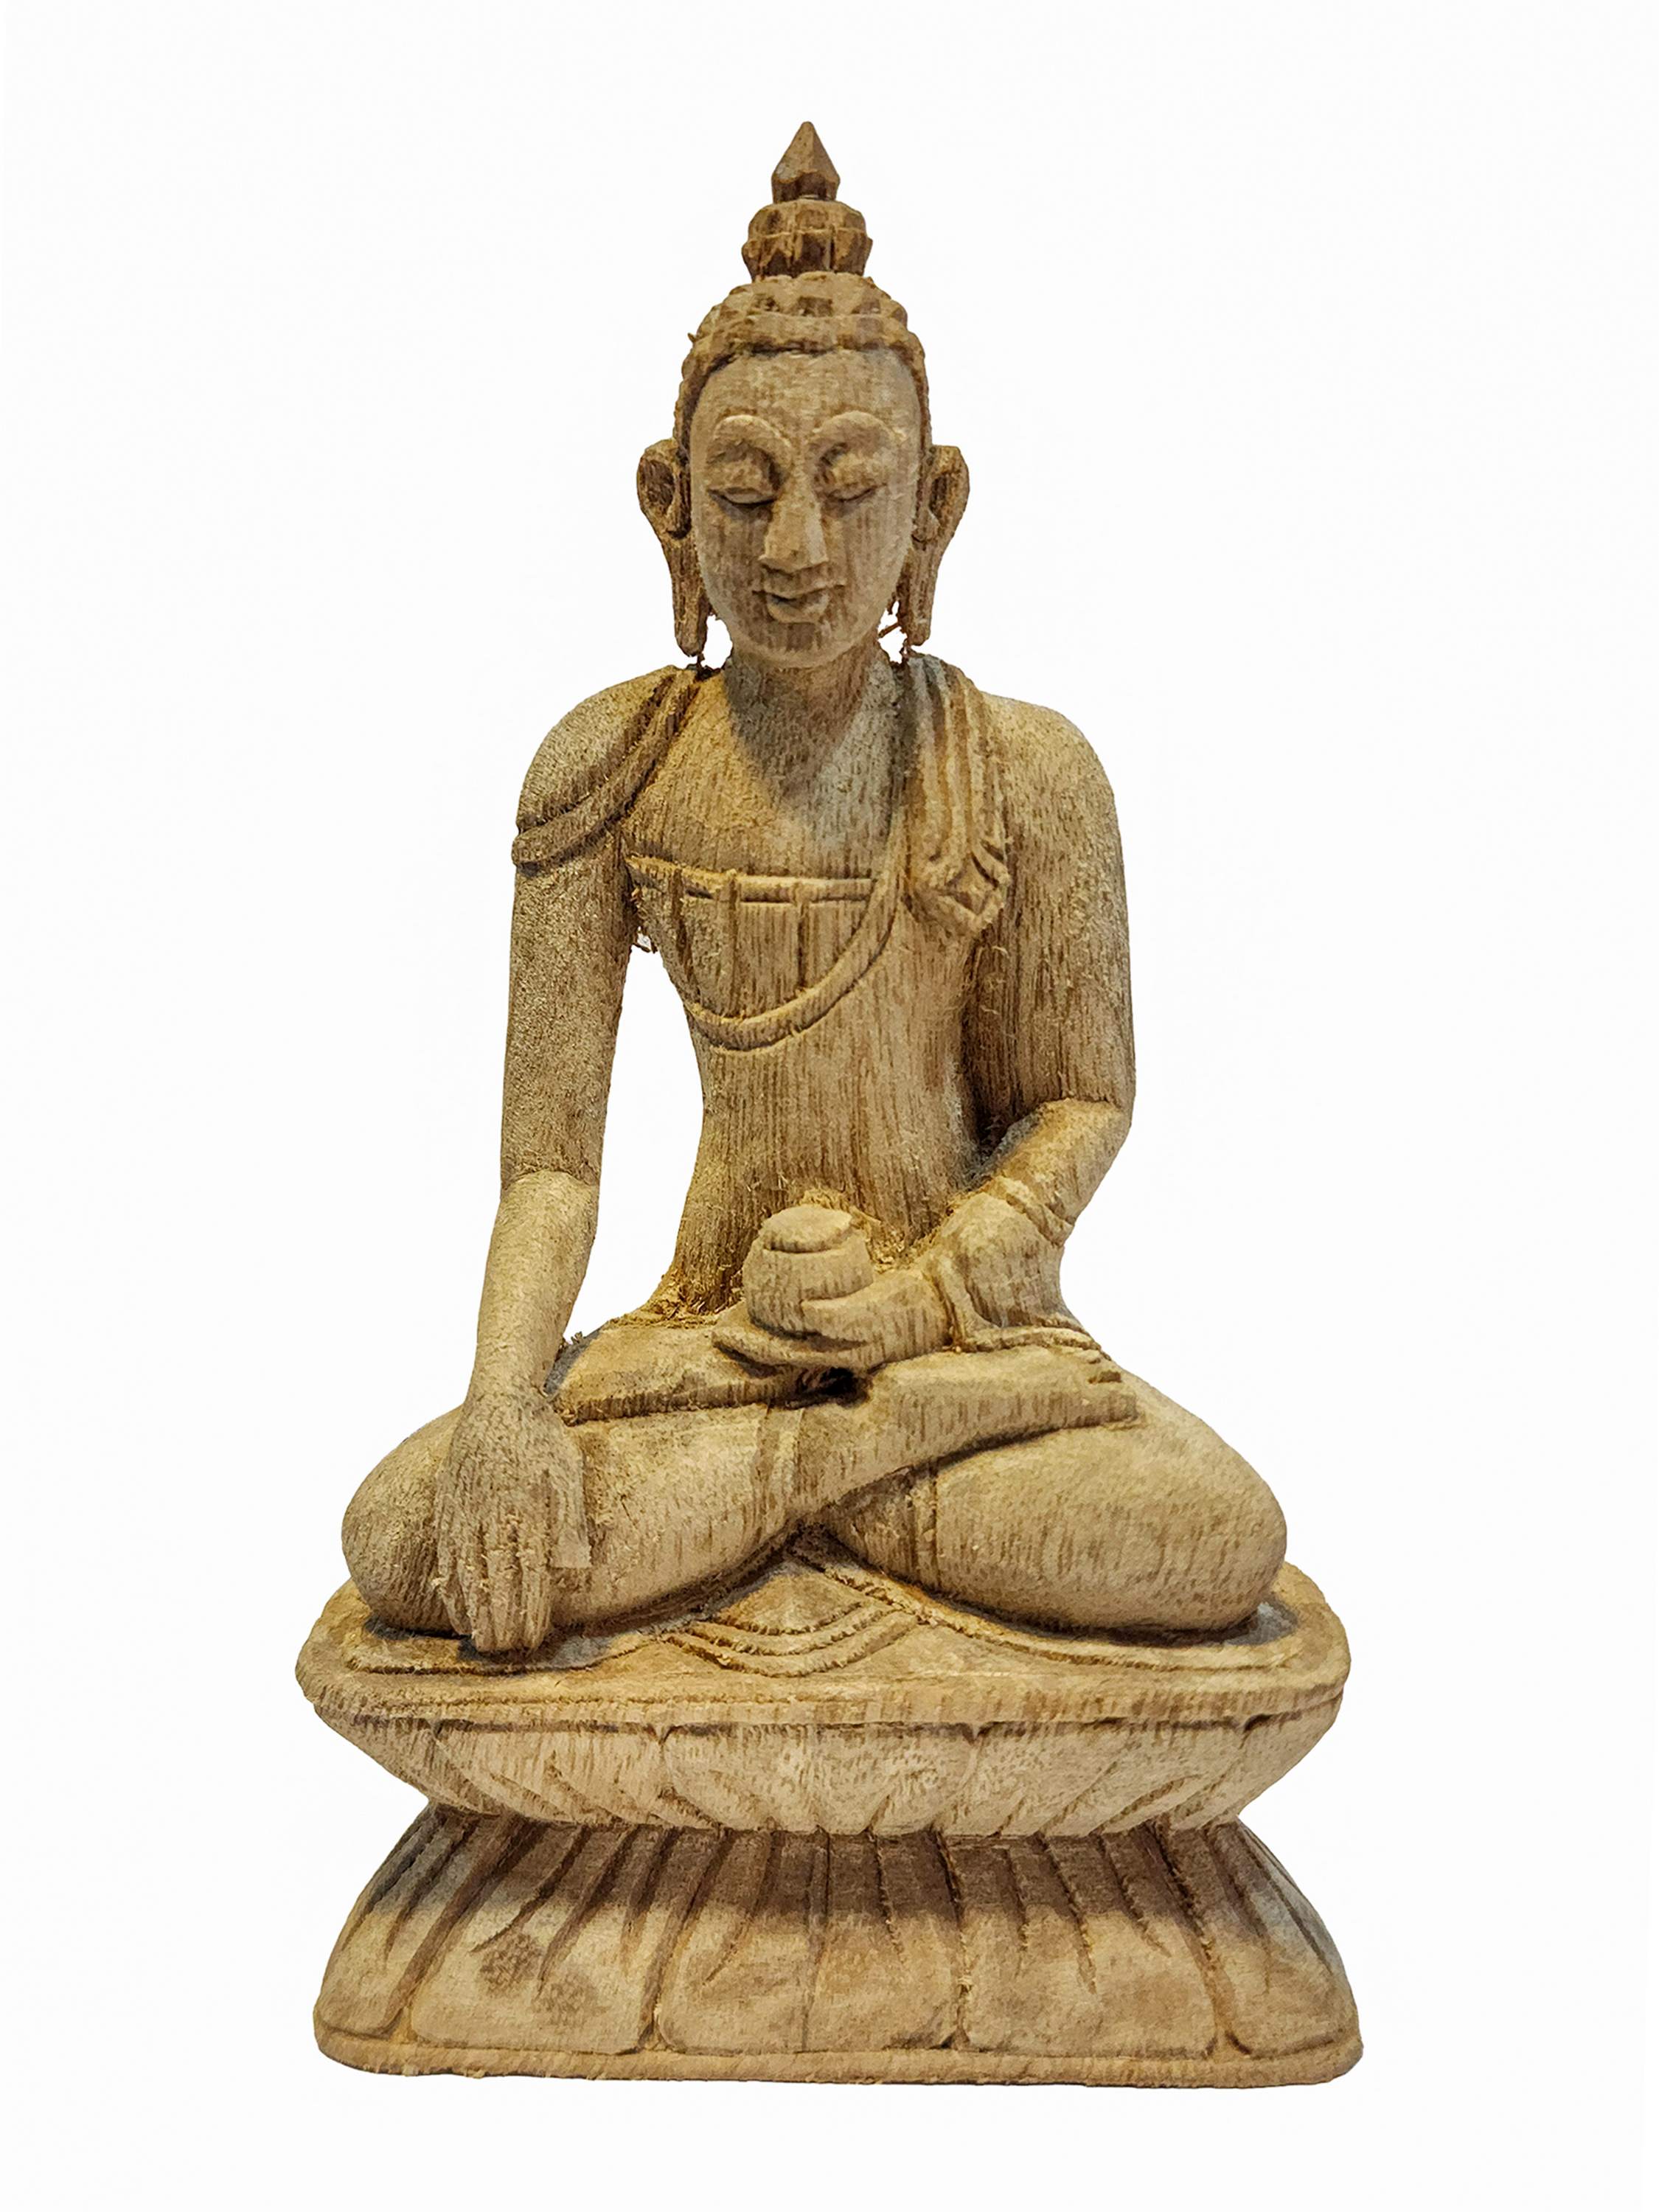 Buddhist Handmade Wooden Statue Of Shakyamuni Buddha, camphor Wood